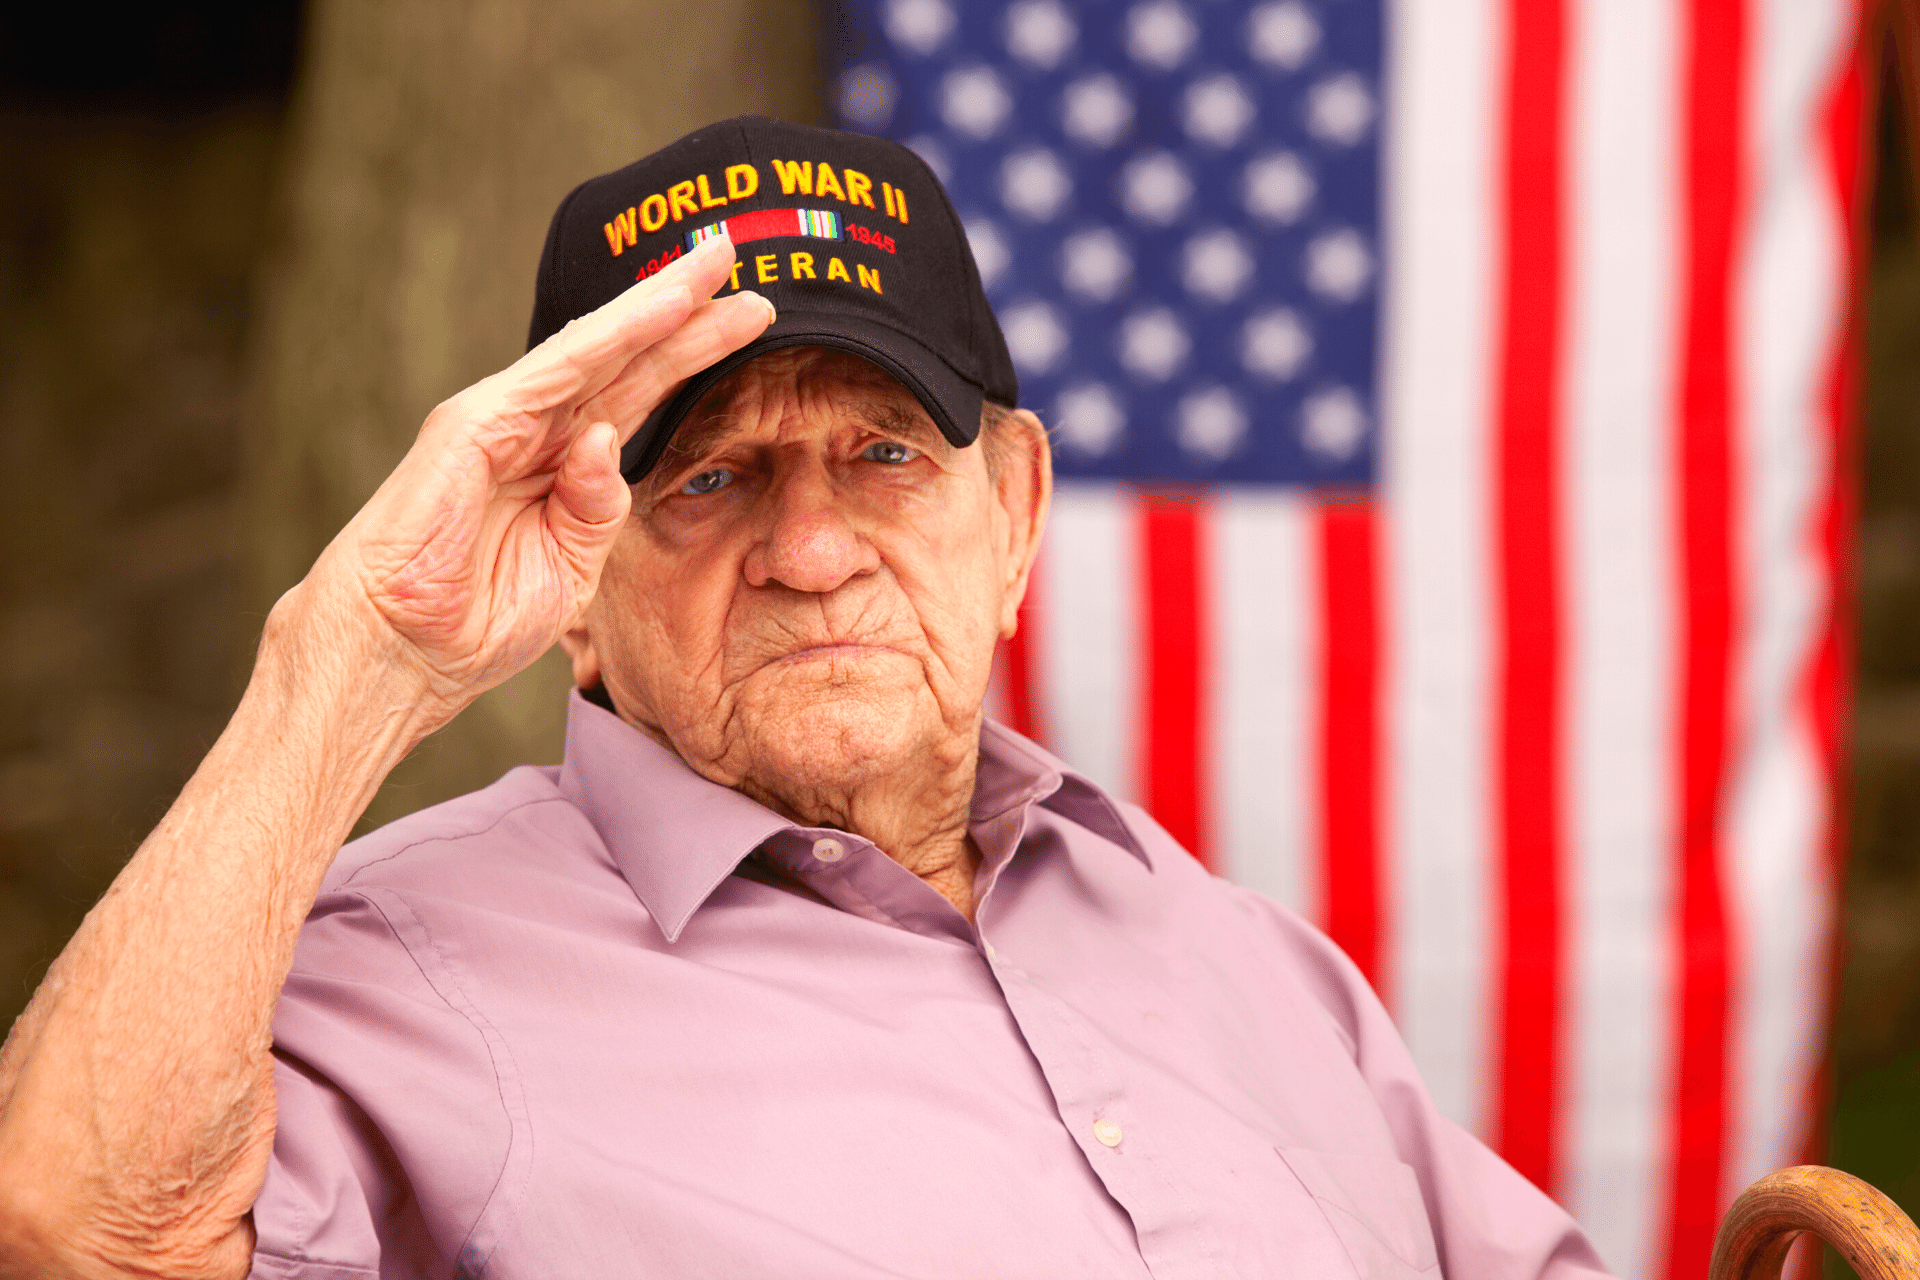 World War Two, Veteran wearing baseball cap with text, "World War Two Veteran". Saluting stock photo